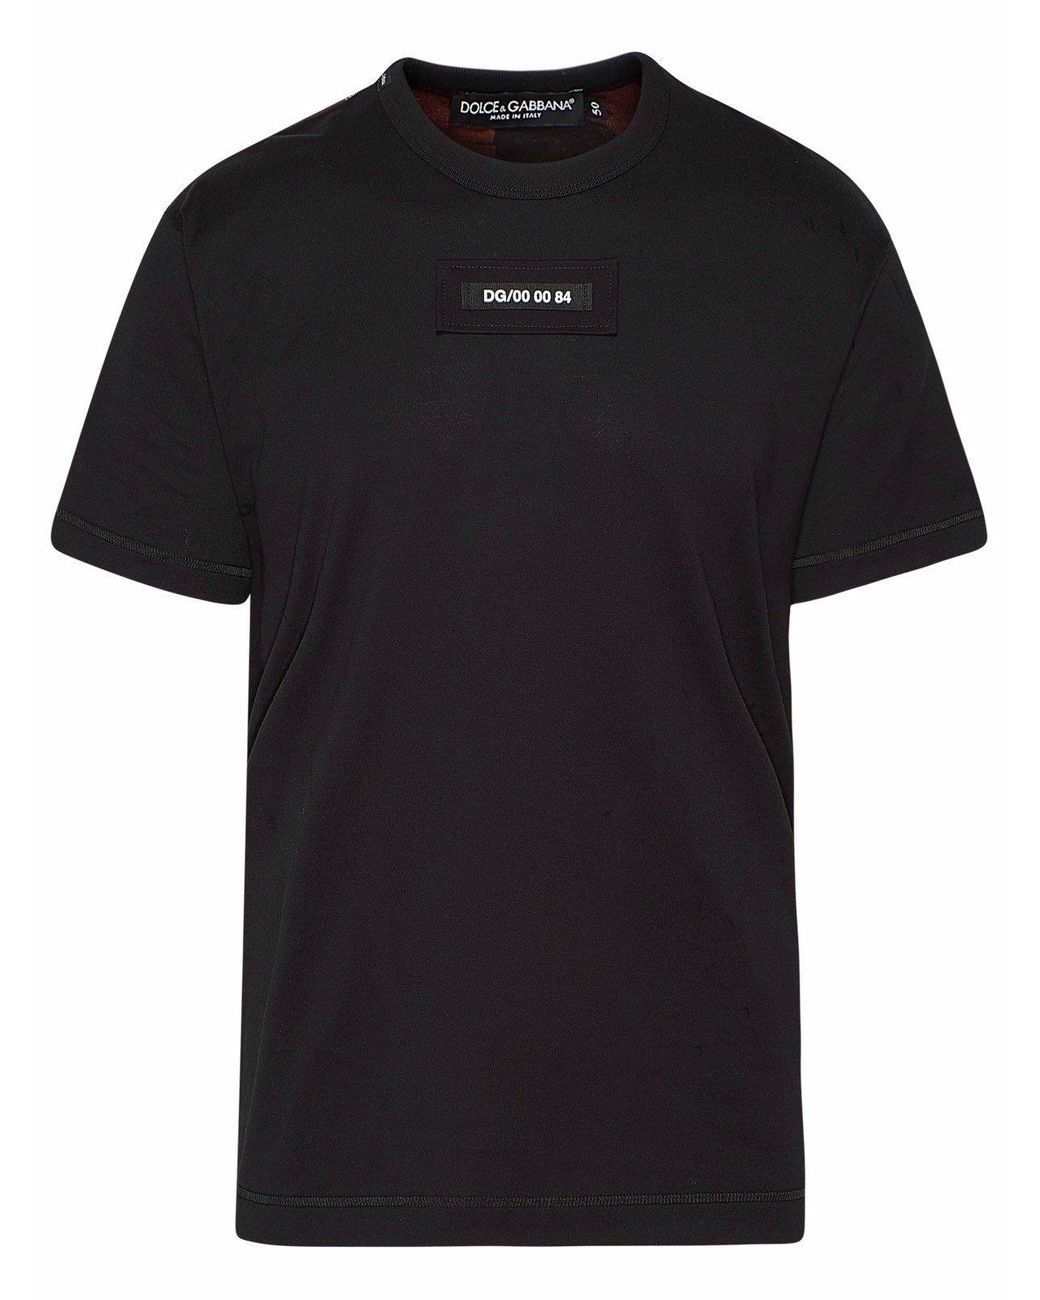 Dolce & Gabbana Cotton Black T-shirt for Men - Lyst